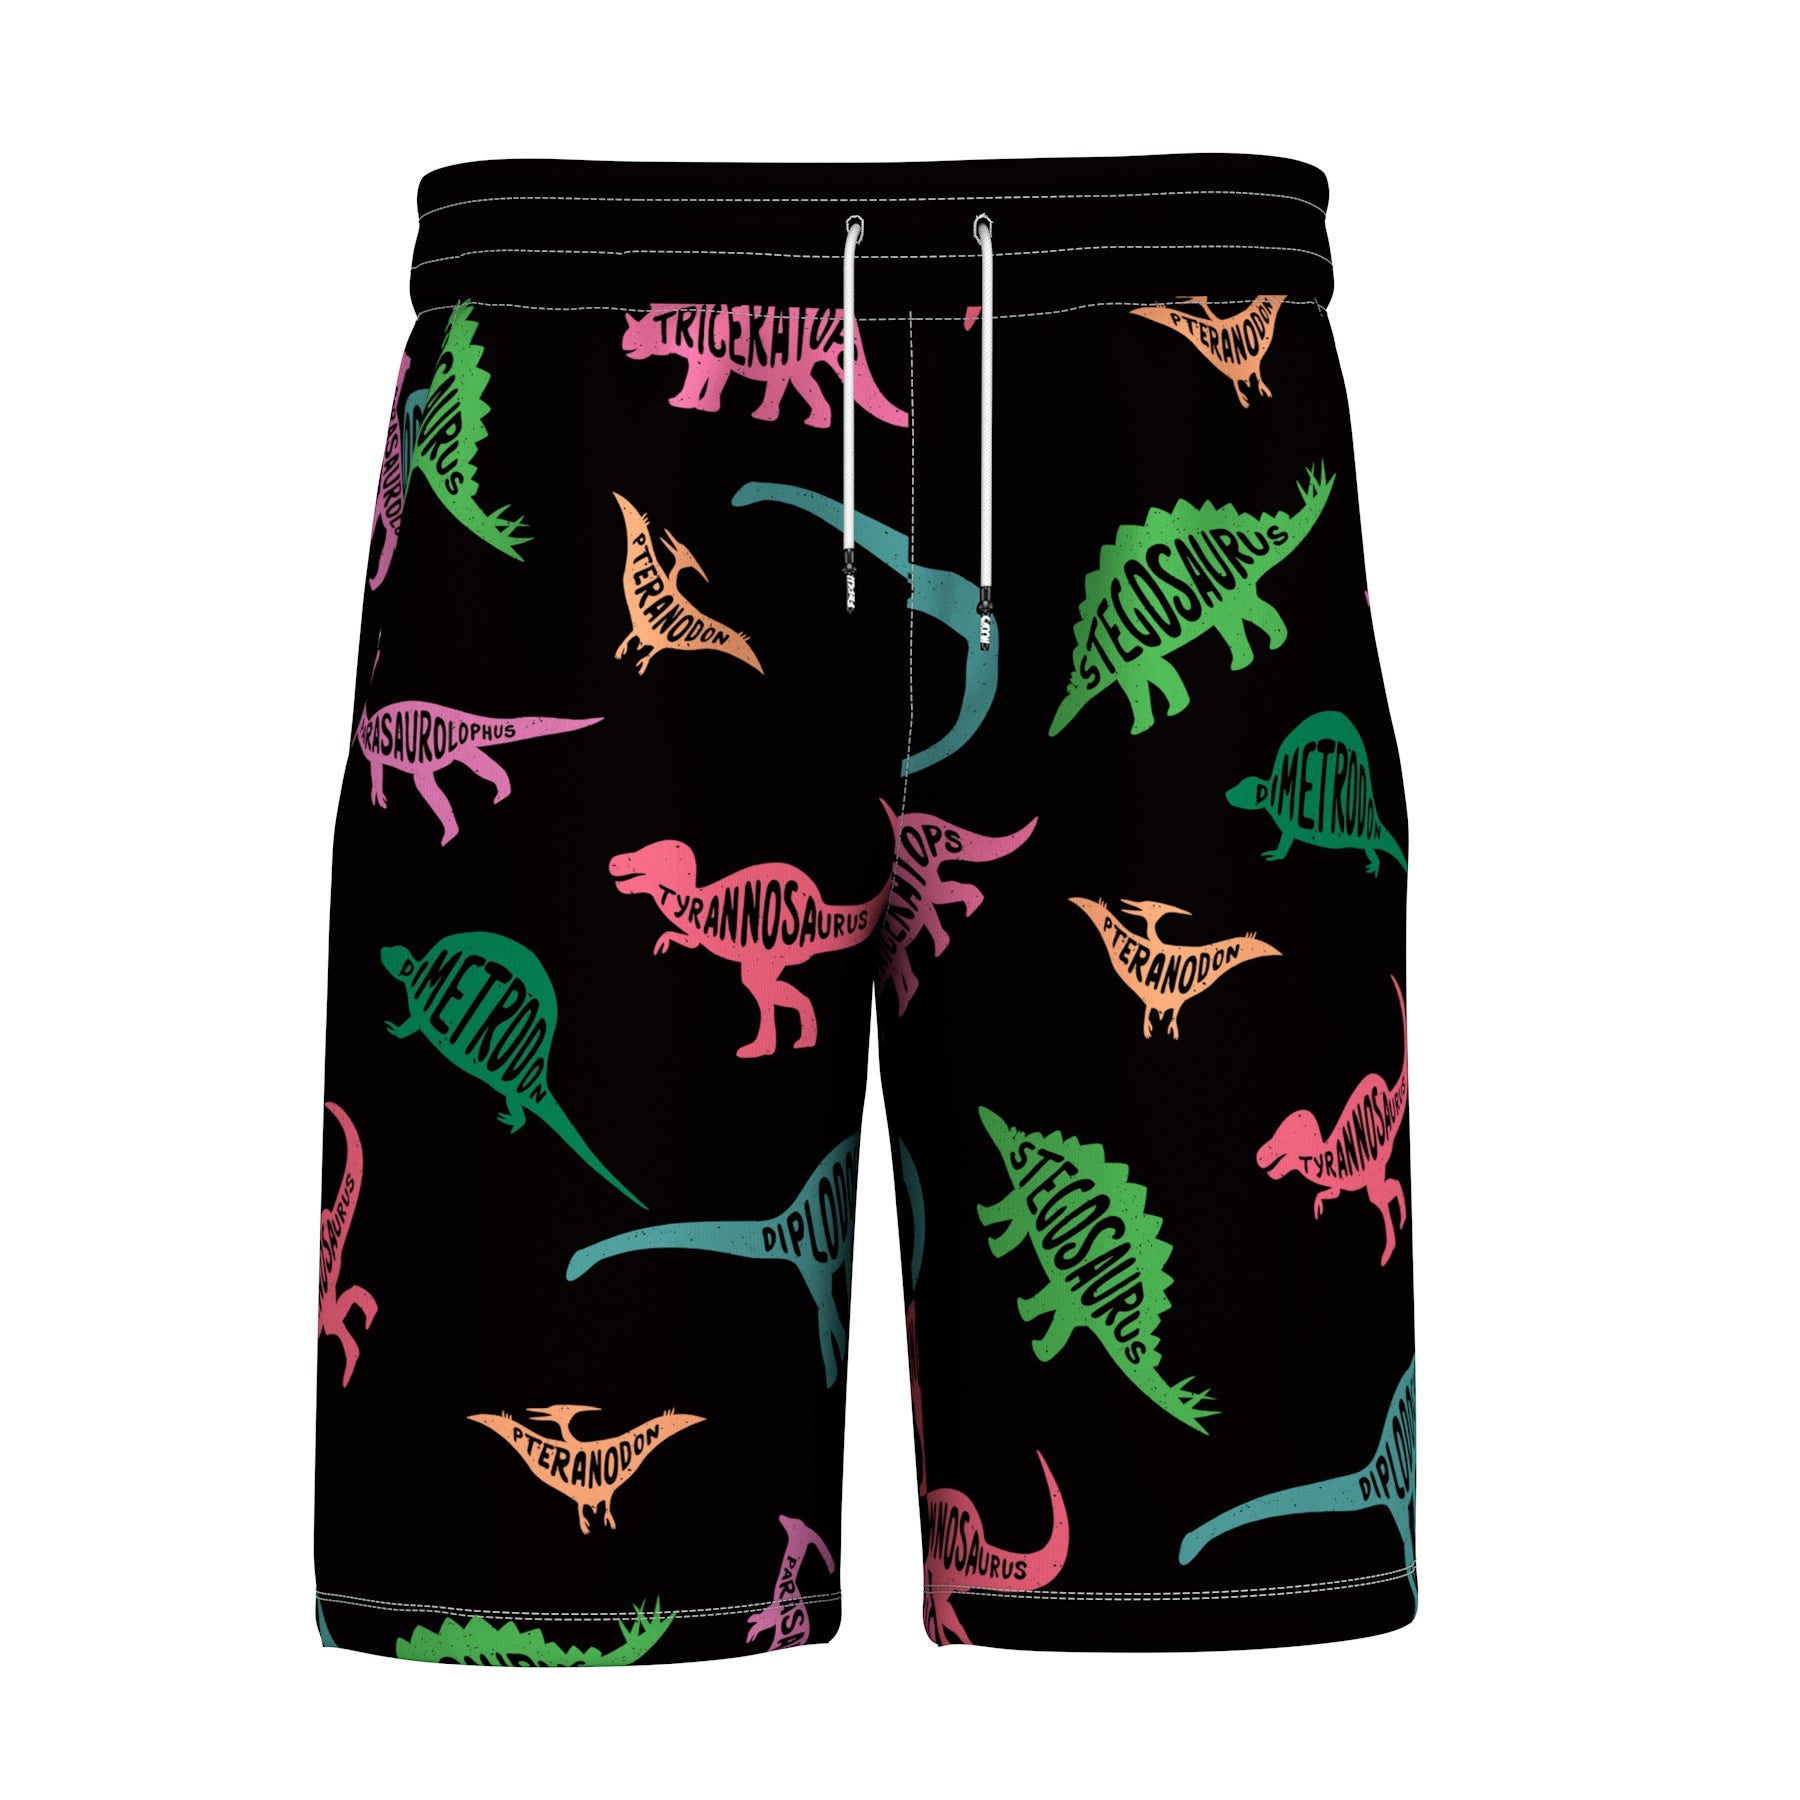 Dinosaurs Shorts